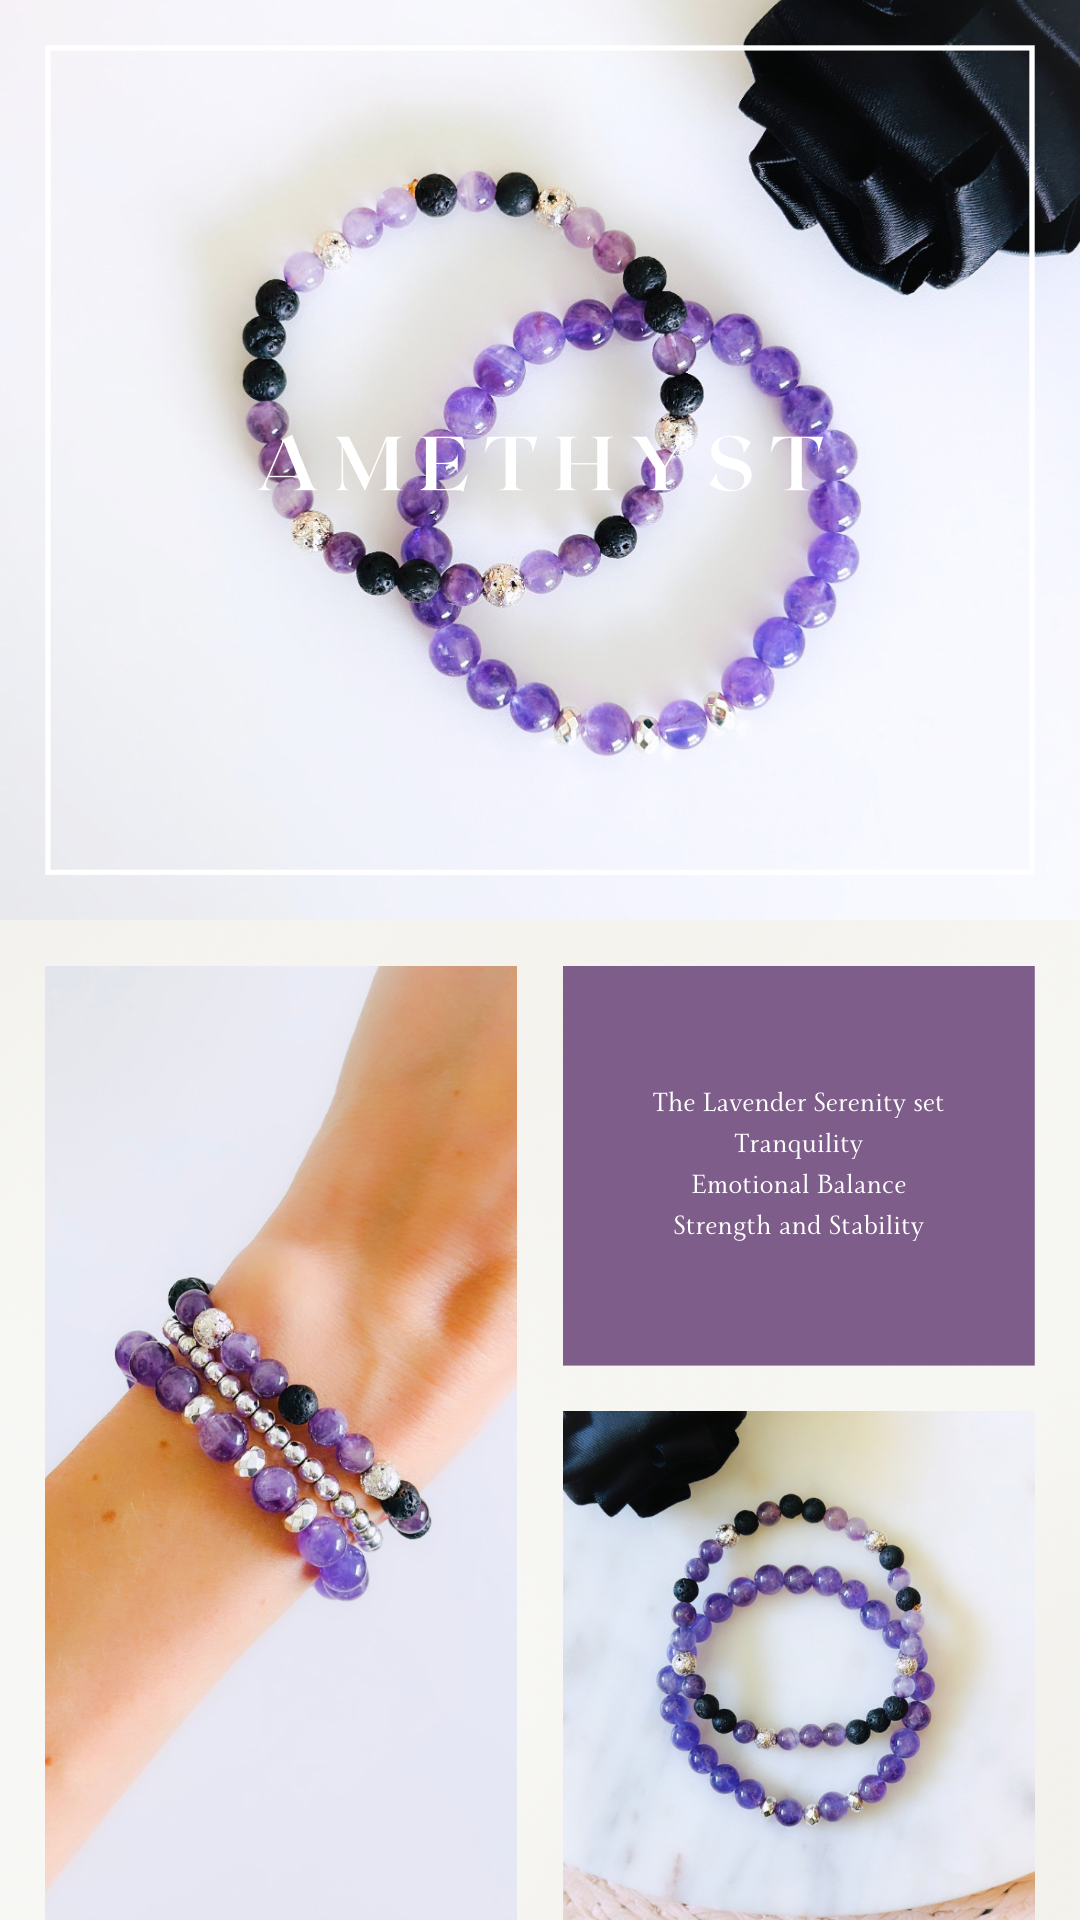 The Lavender Serenity set